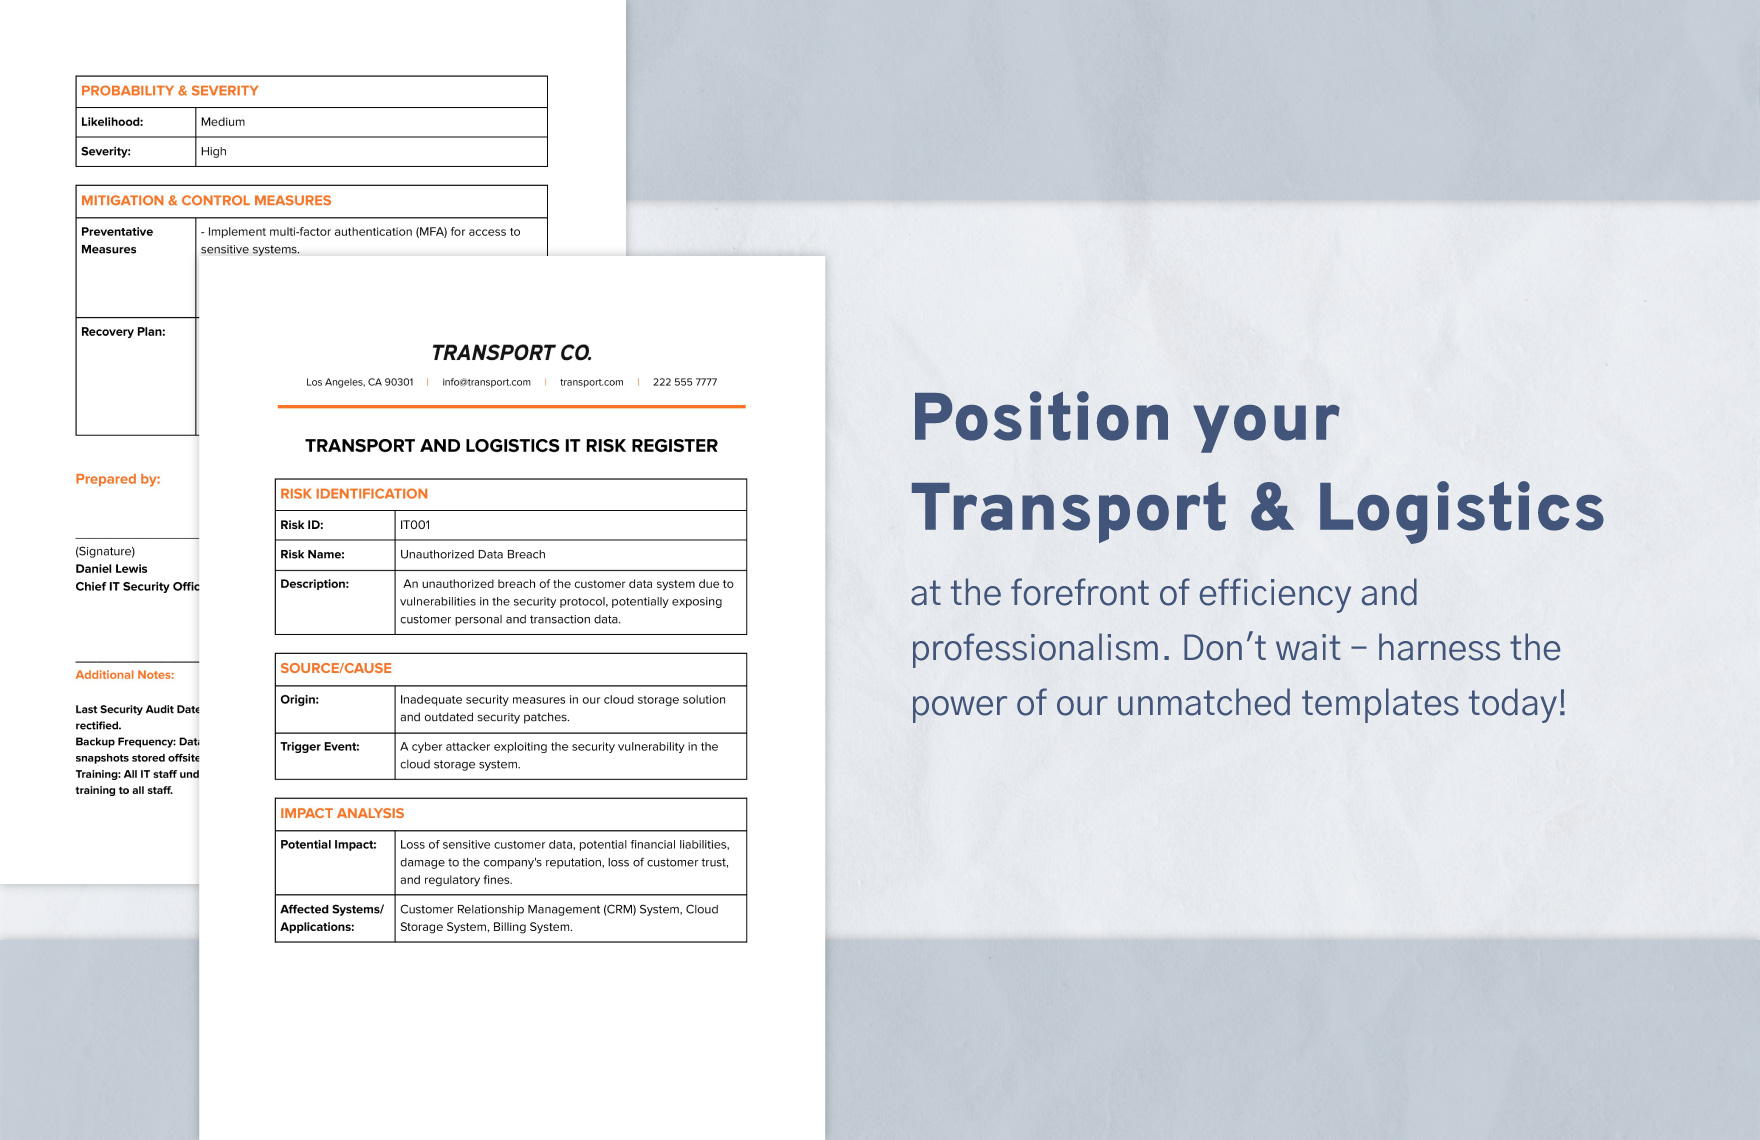 Transport and Logistics IT Risk Register Template